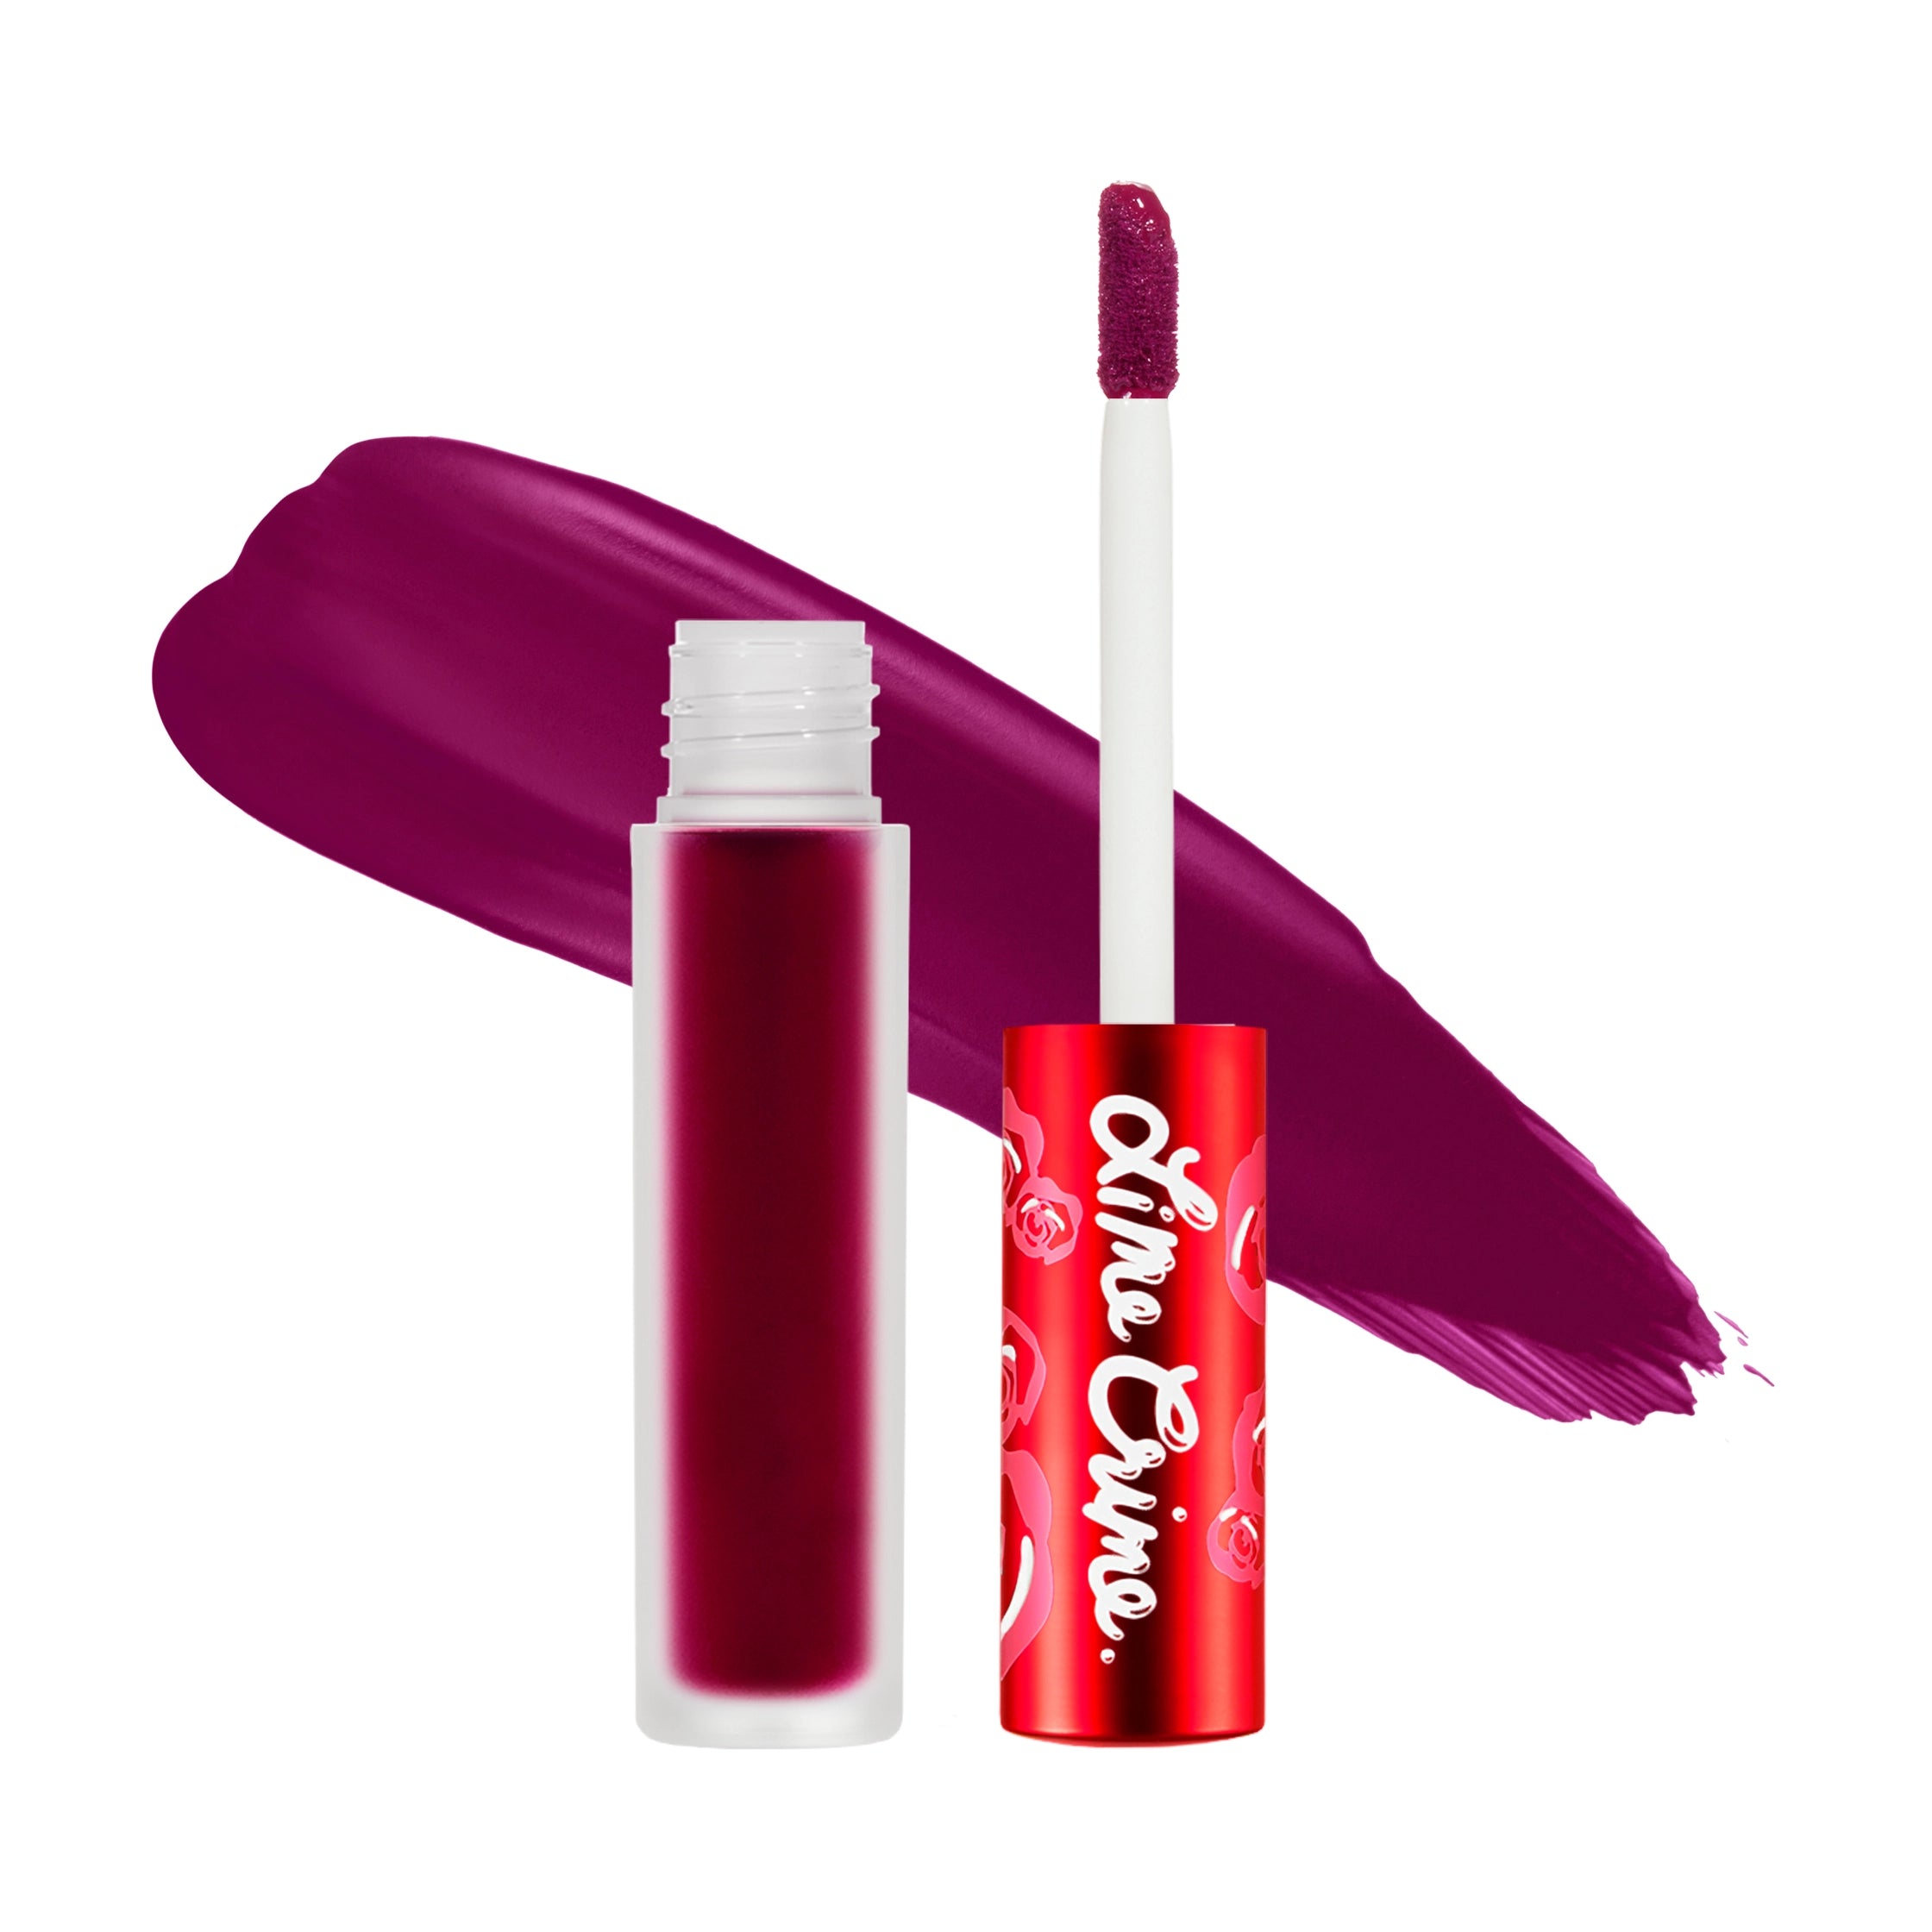 Velvetines Liquid Lipstick variant:Beet it